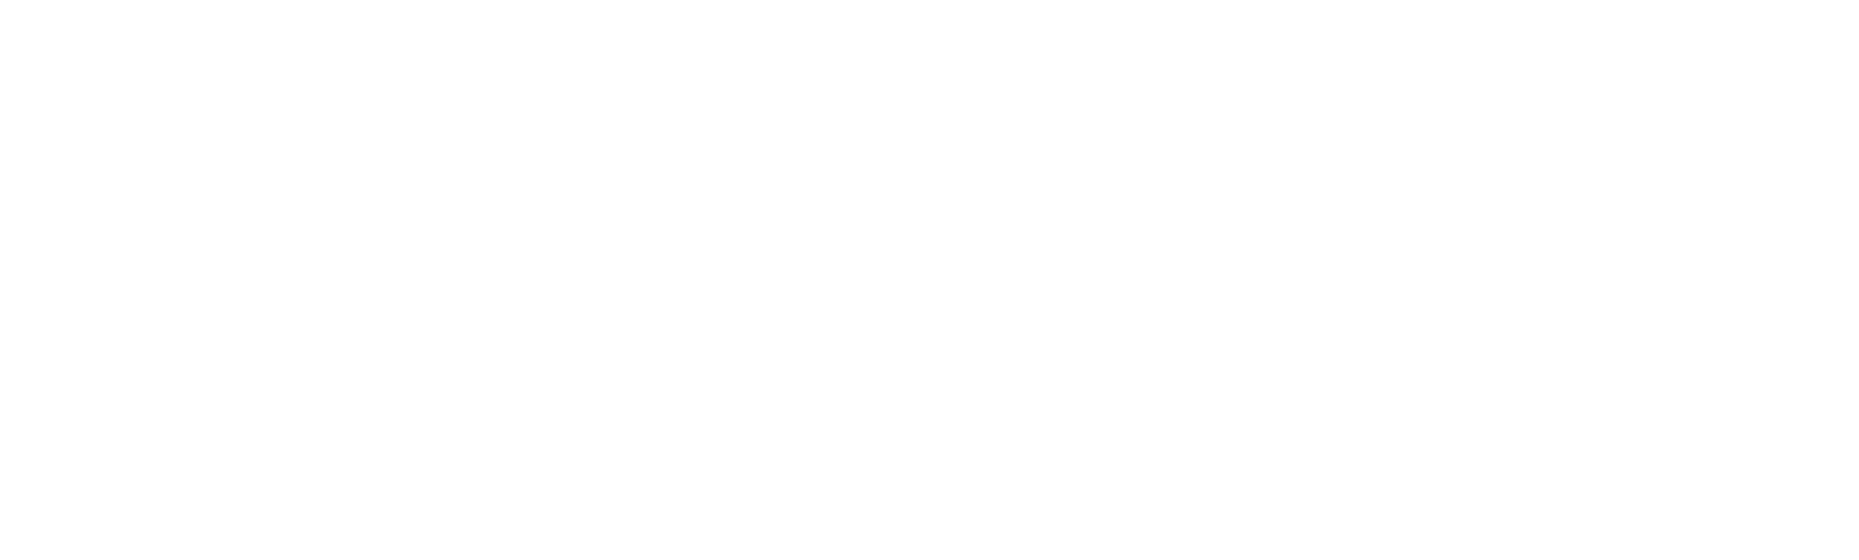 Mason schools foundation logo, white